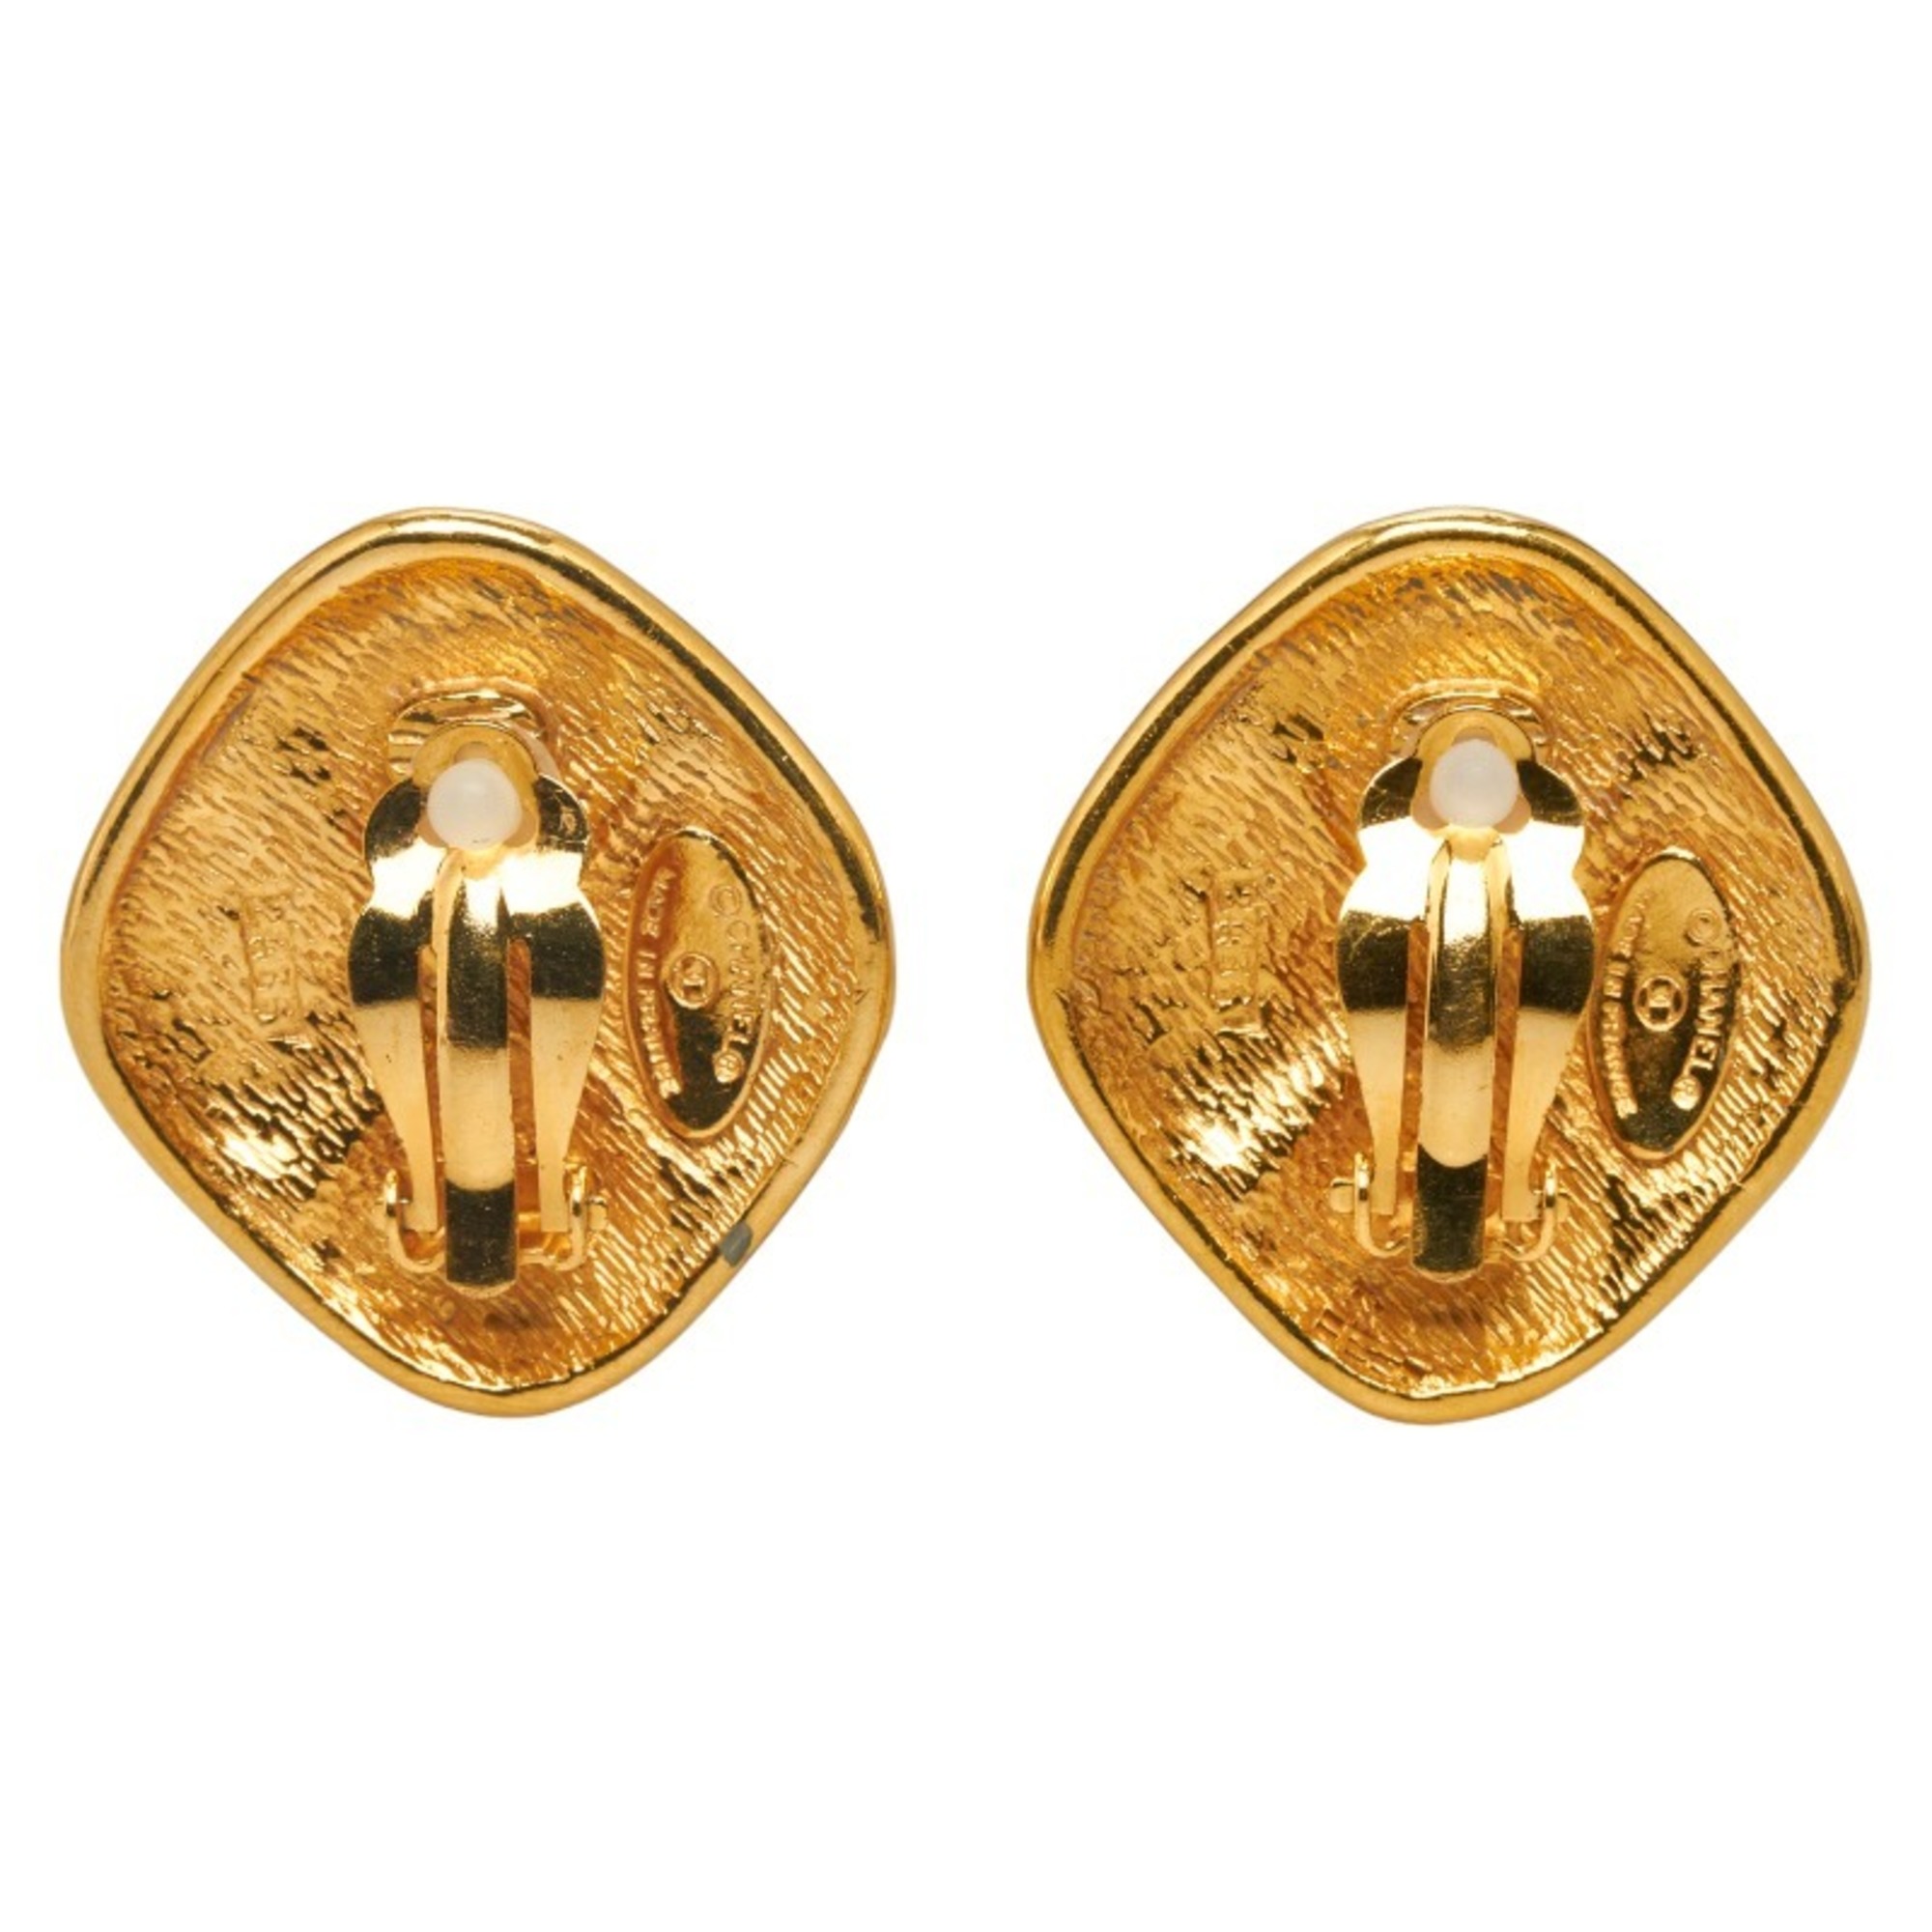 CHANEL Matelasse Earrings Gold Plated Women's